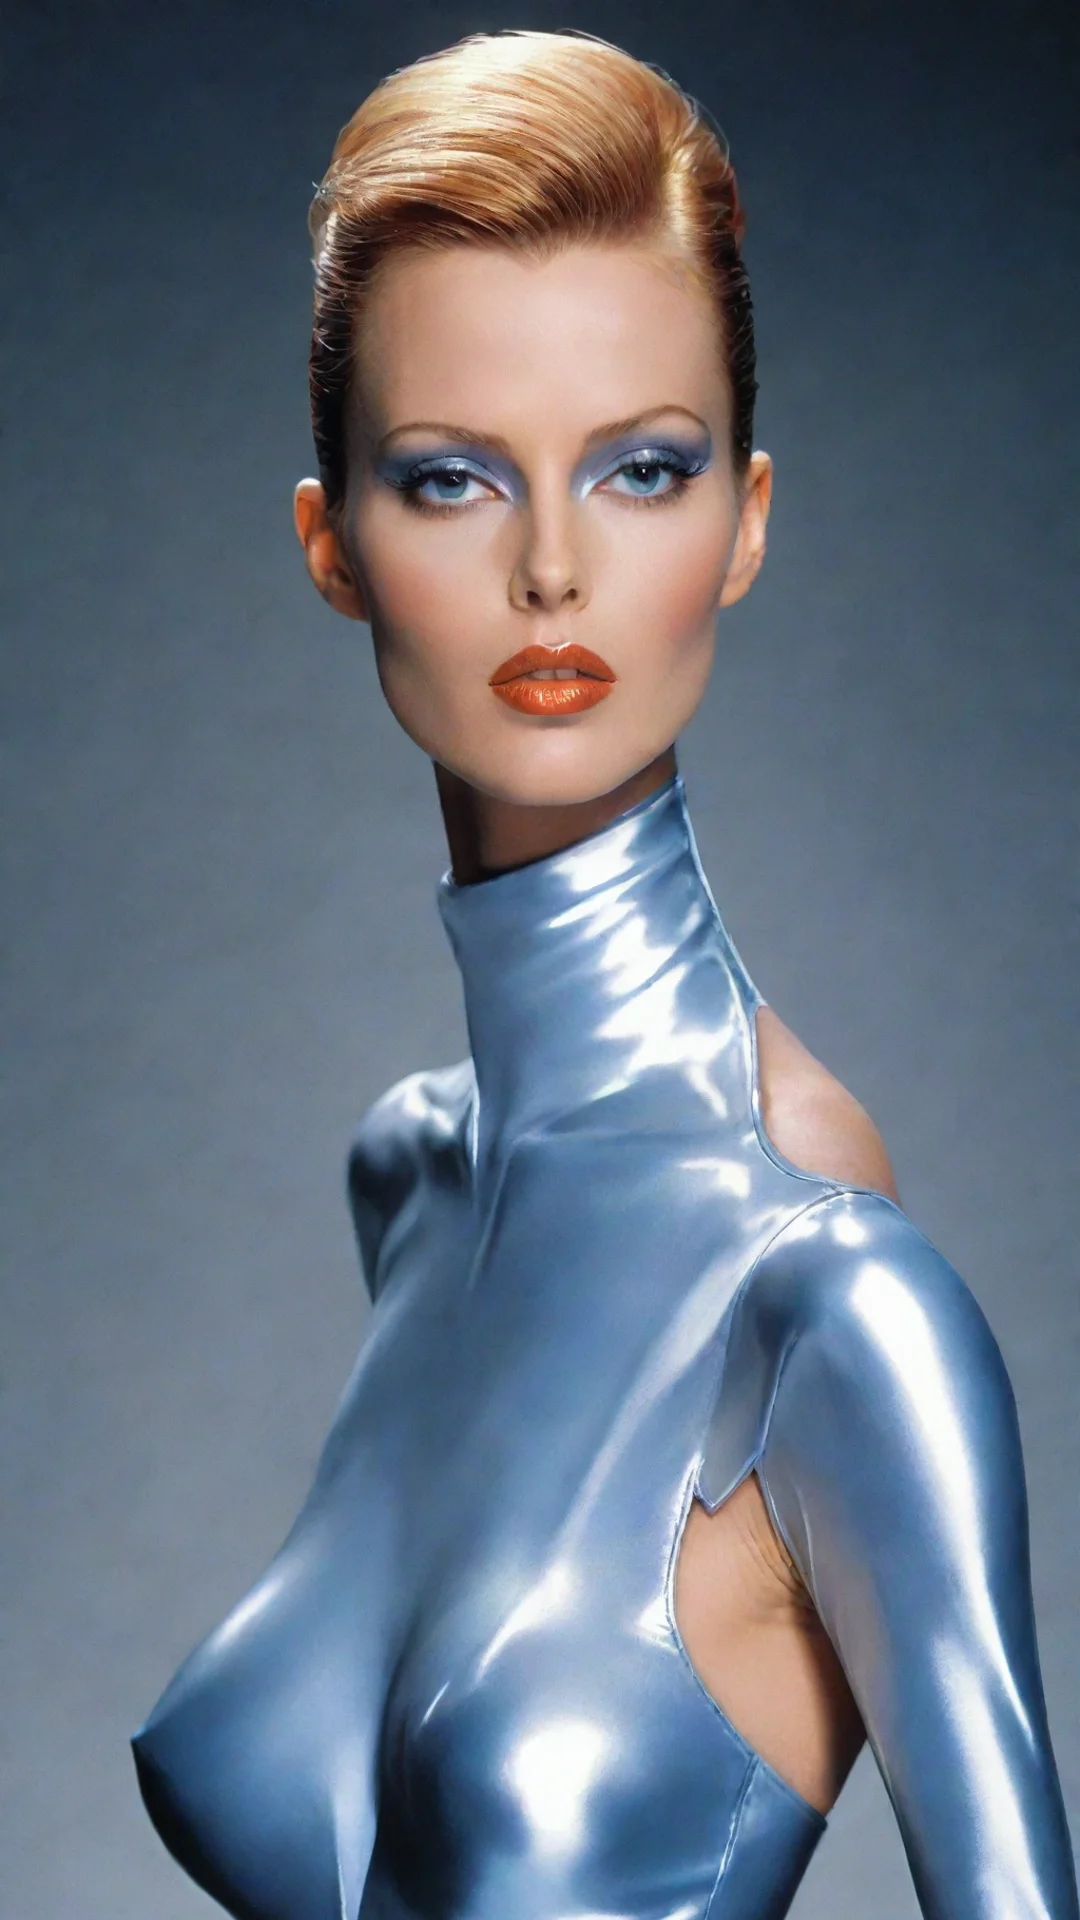 aiamazing thierry mugler fashion style futuristic supermodel awesome portrait 2 tall